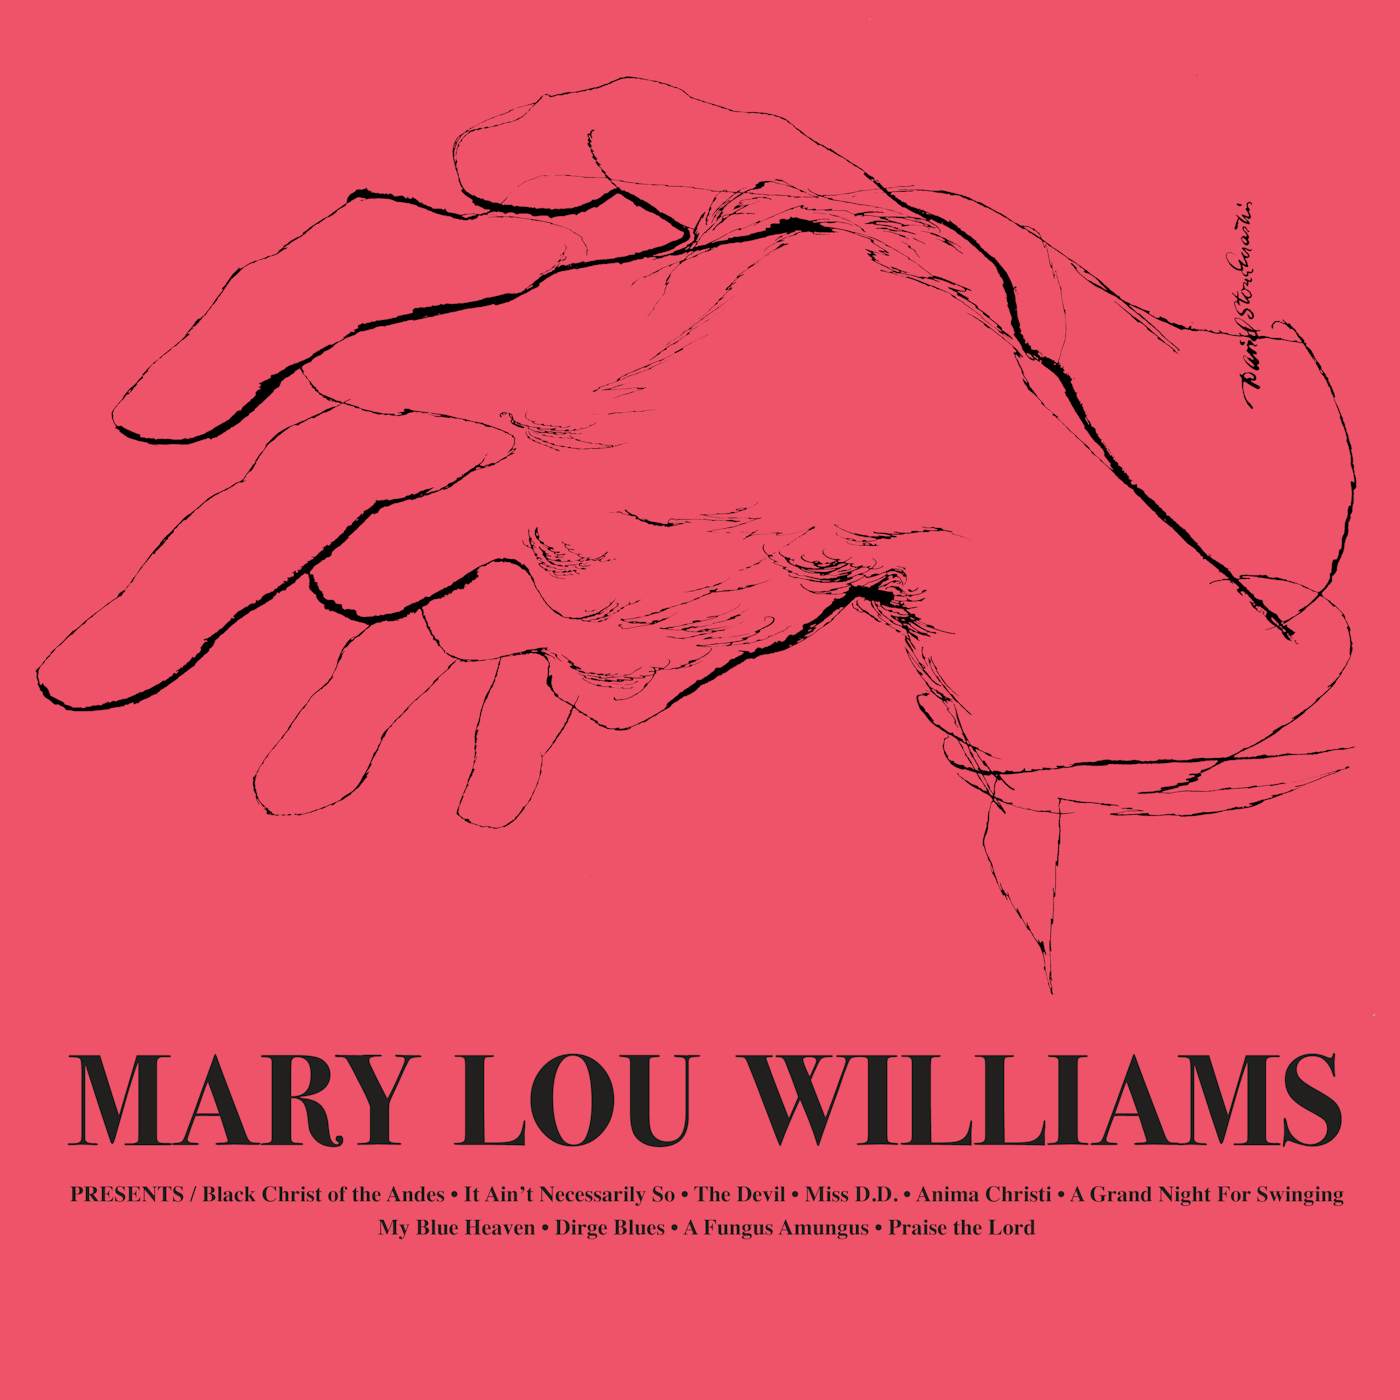 Mary Lou Williams Vinyl Record